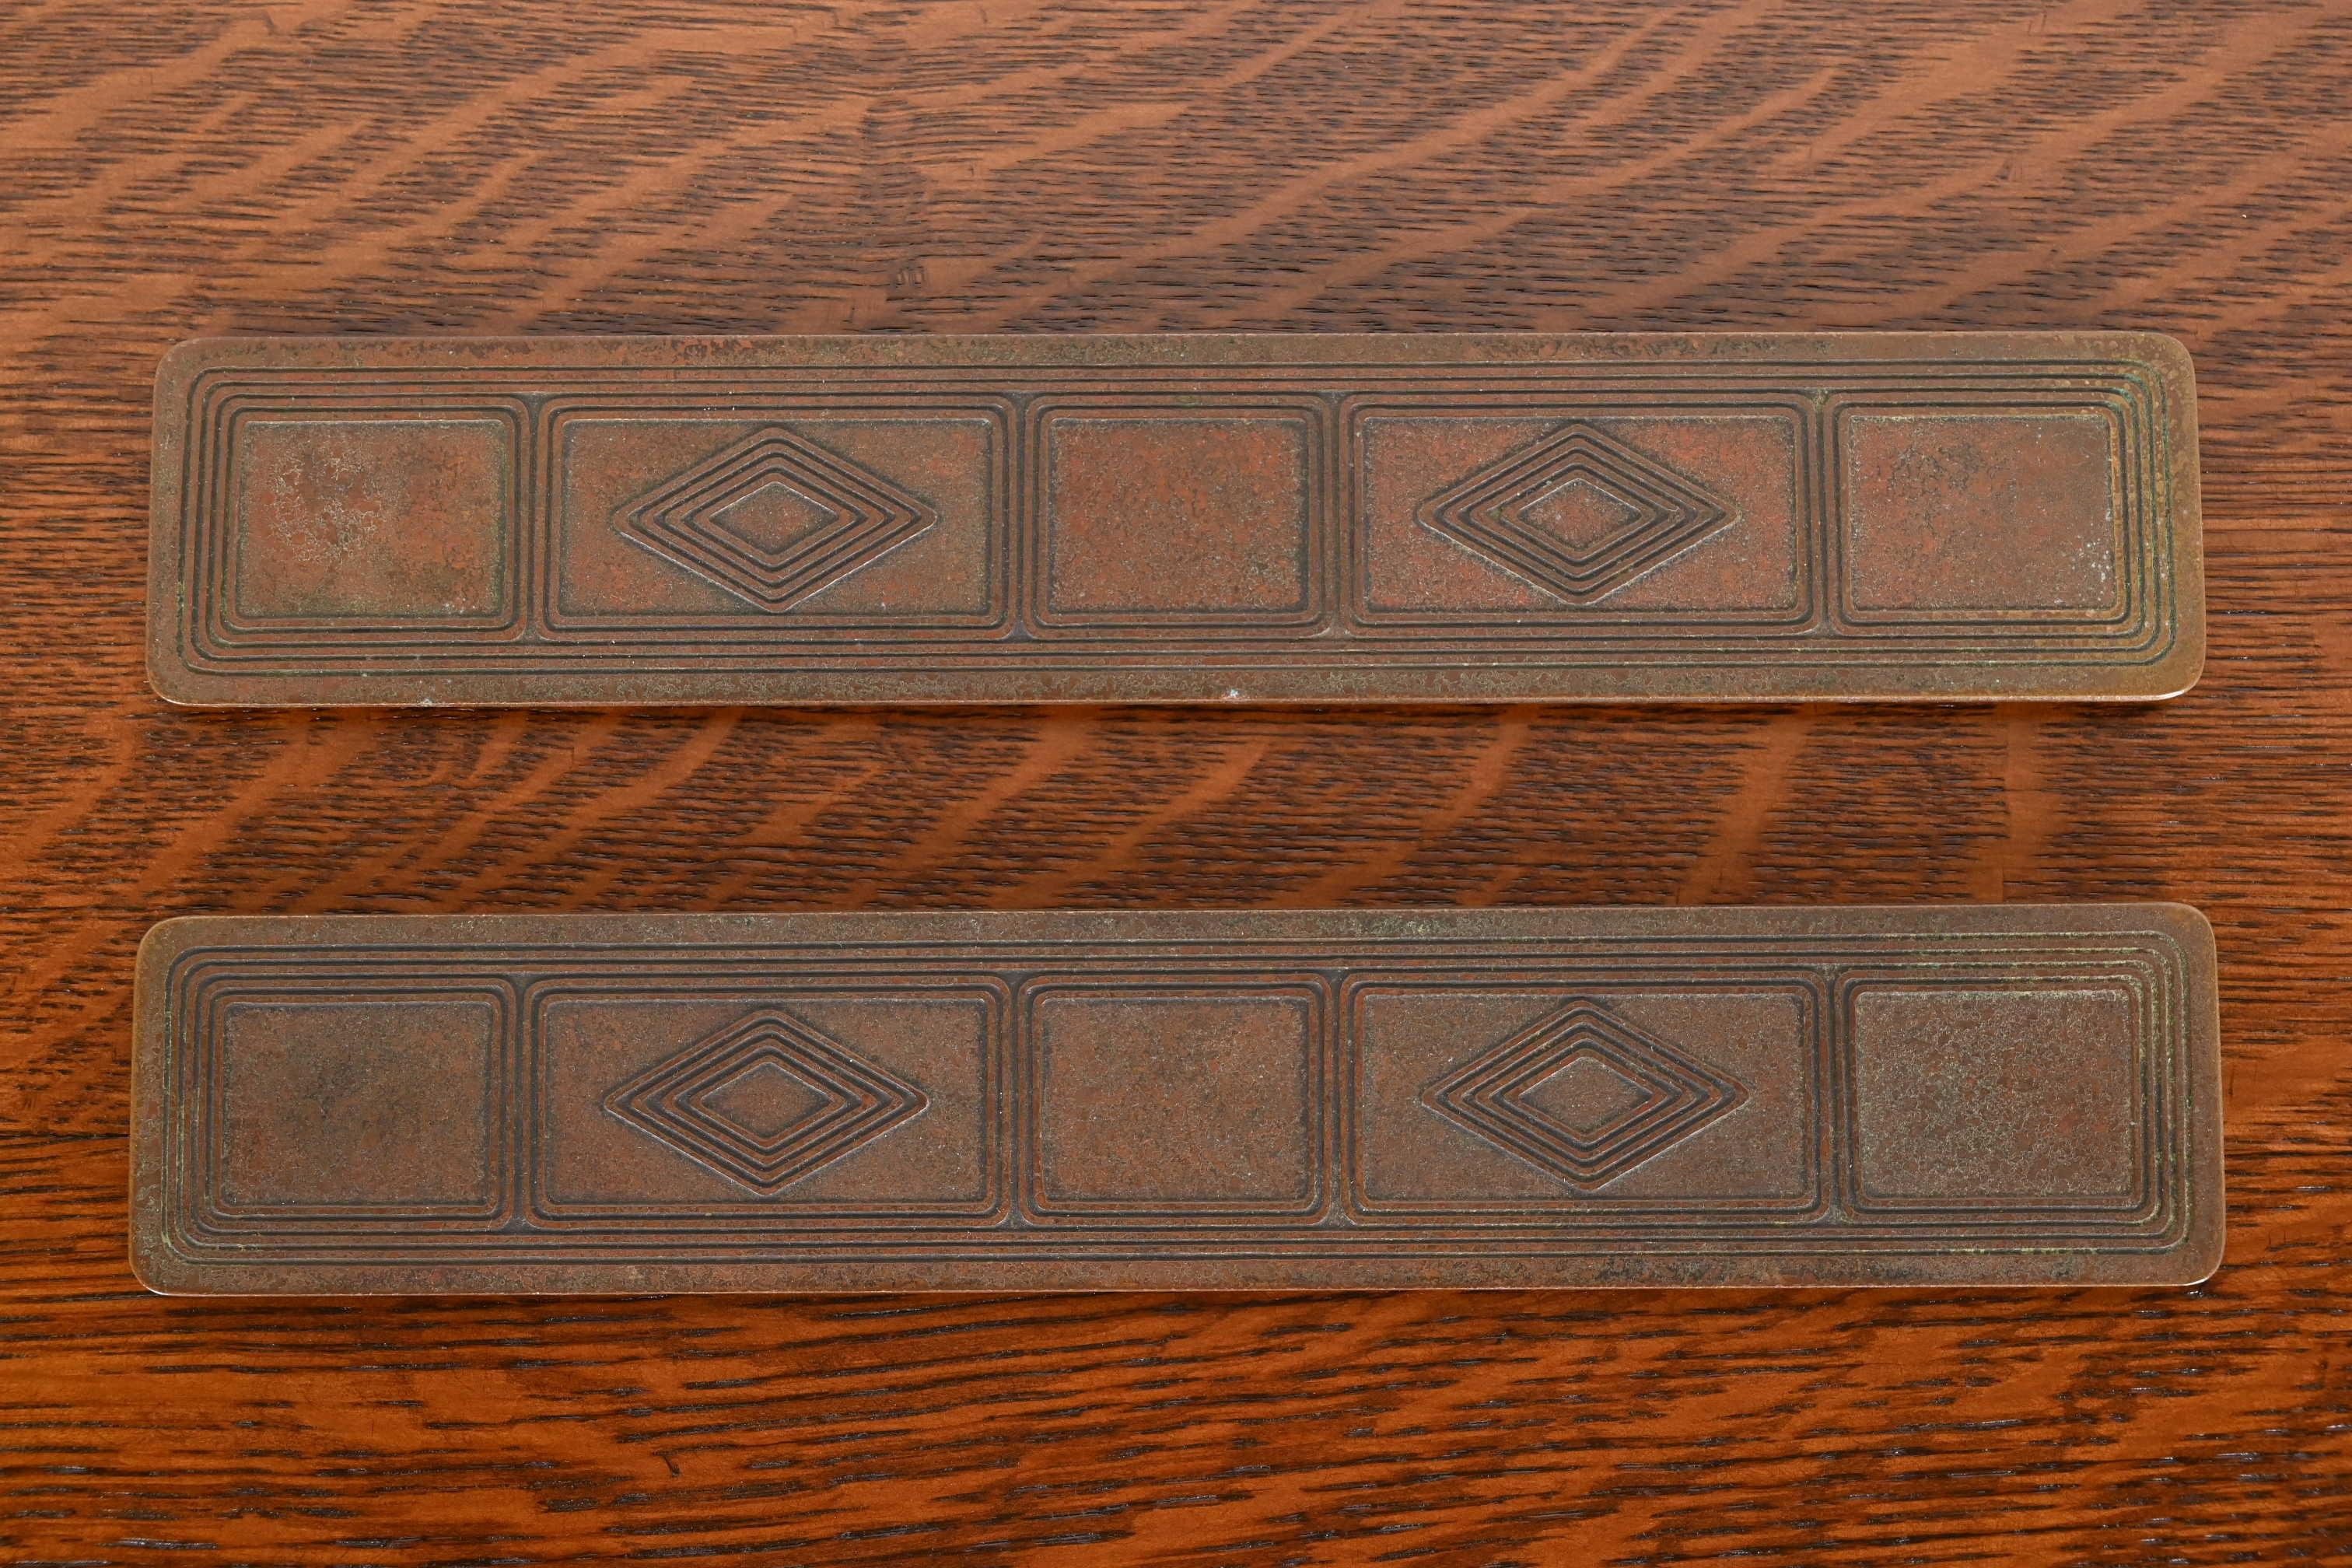 Tiffany Studios Graduate Pattern Bronze Blotter Ends With Leather Desk Blotter For Sale 1